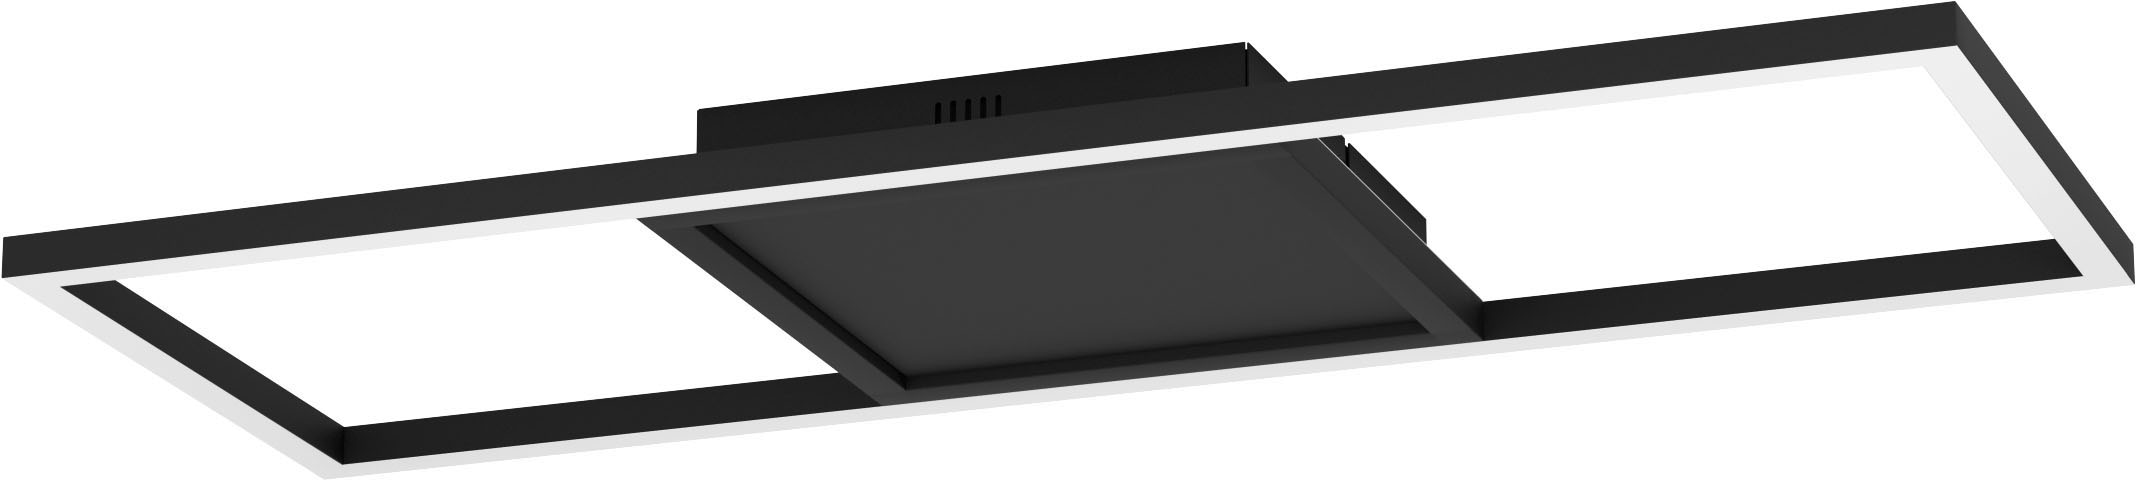 EGLO LED-Deckenleuchte »CALAGRANO-Z« in schwarz aus Alu, Stahl / inkl. LED  fest integriert - 21 Watt, Gr. ca. 64 x 24 cm | BAUR